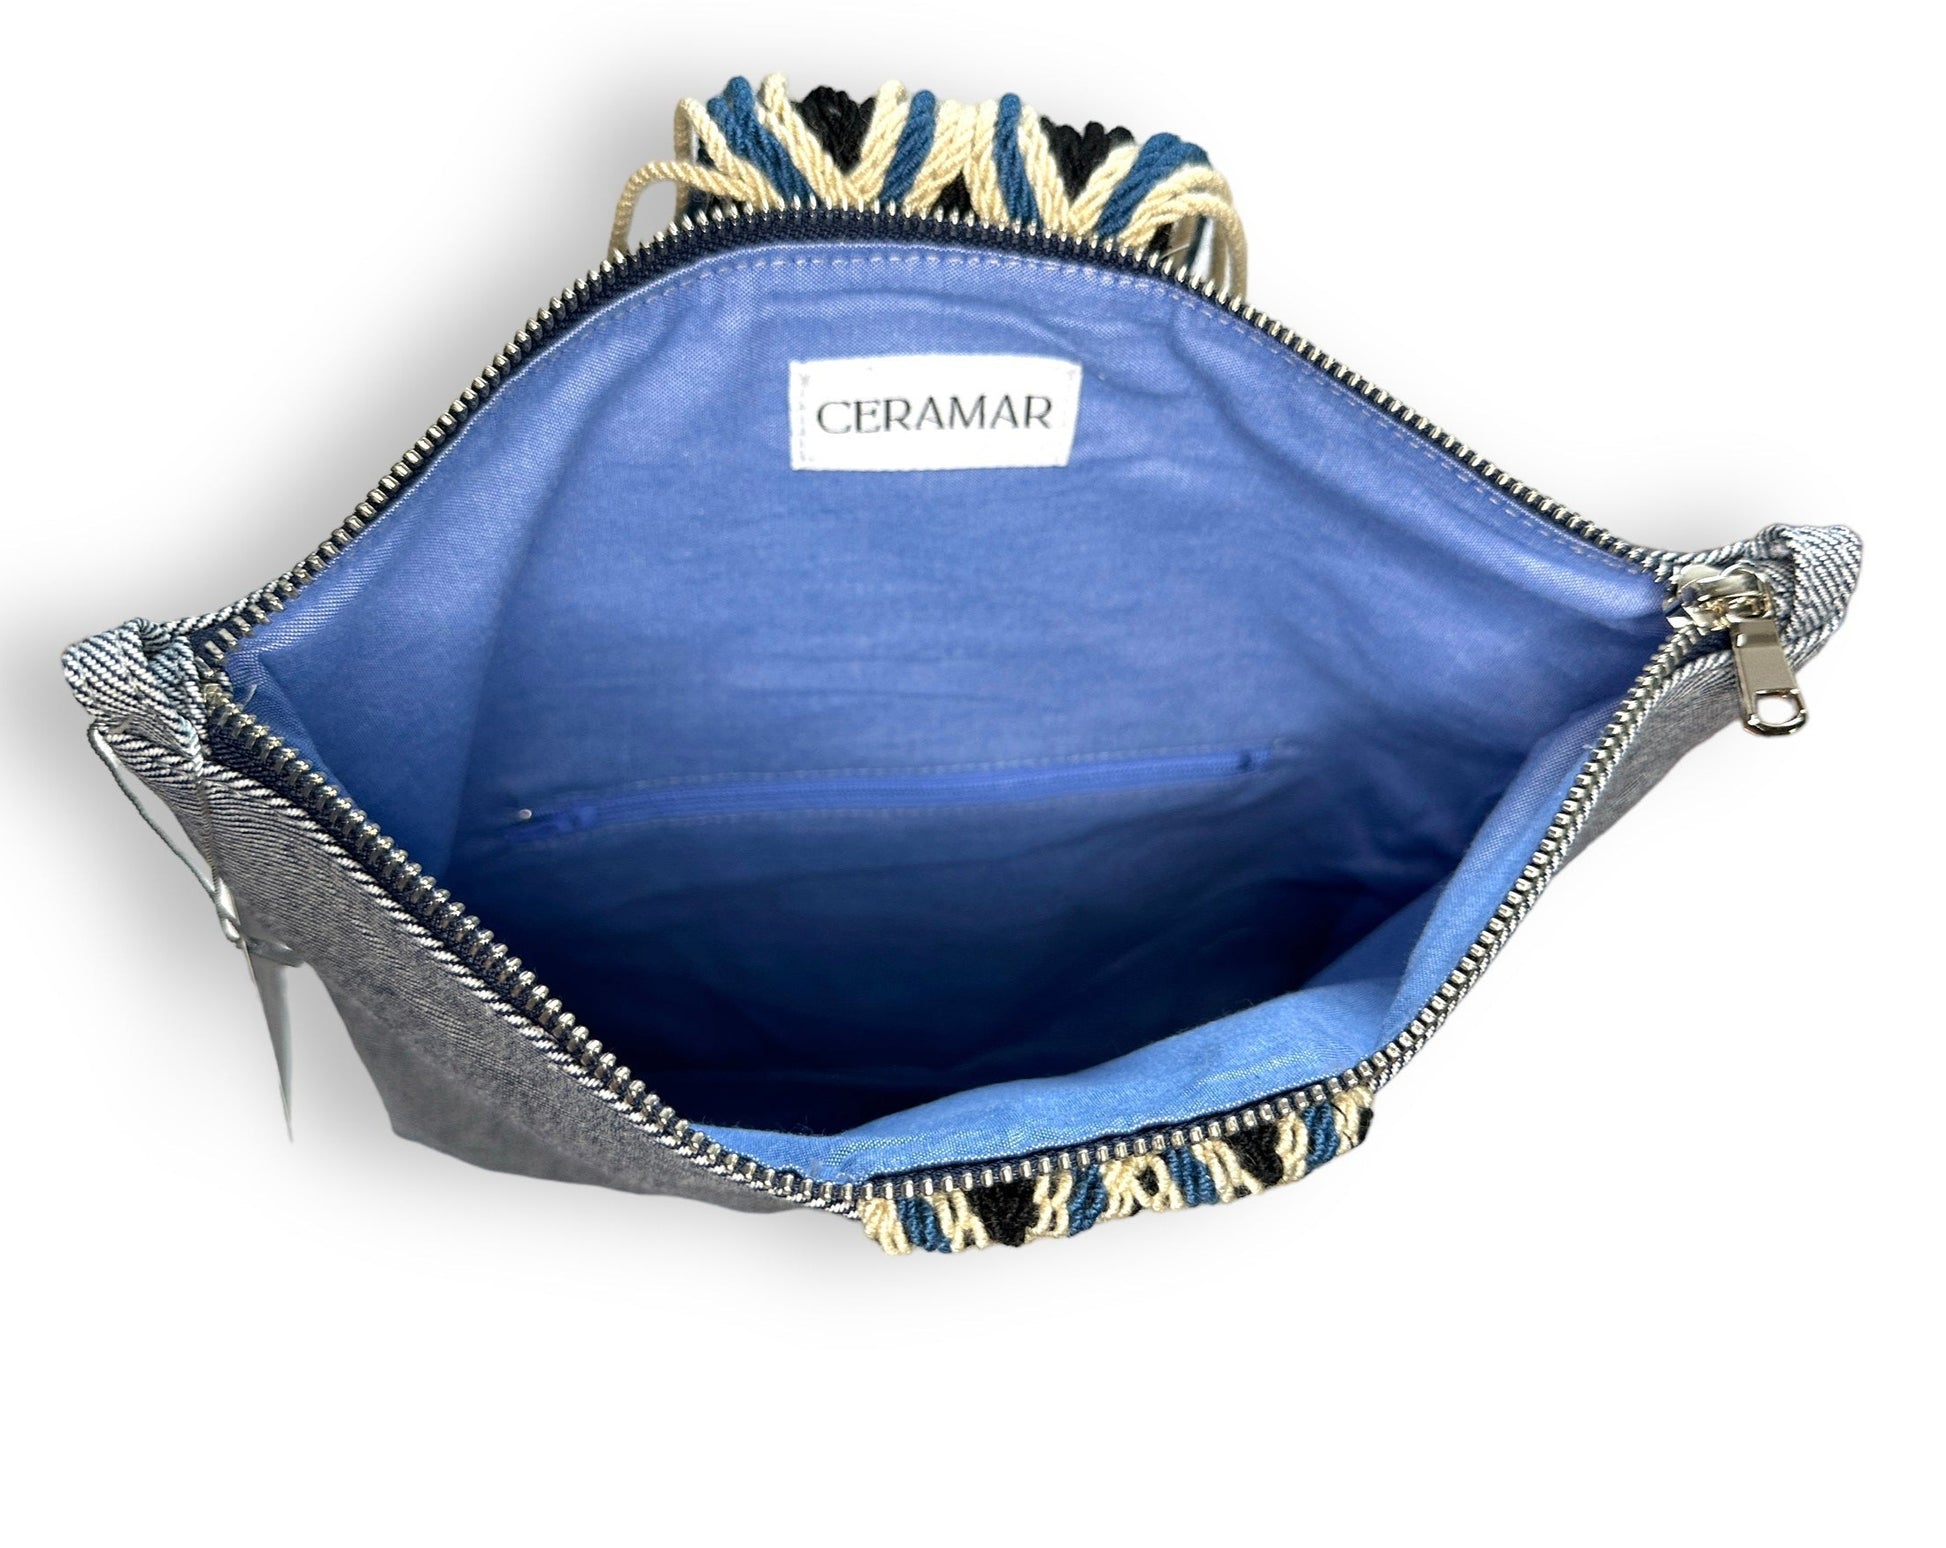 Foldover Crossbody Bag- Versatile Crossbody bag can be worn 3 ways